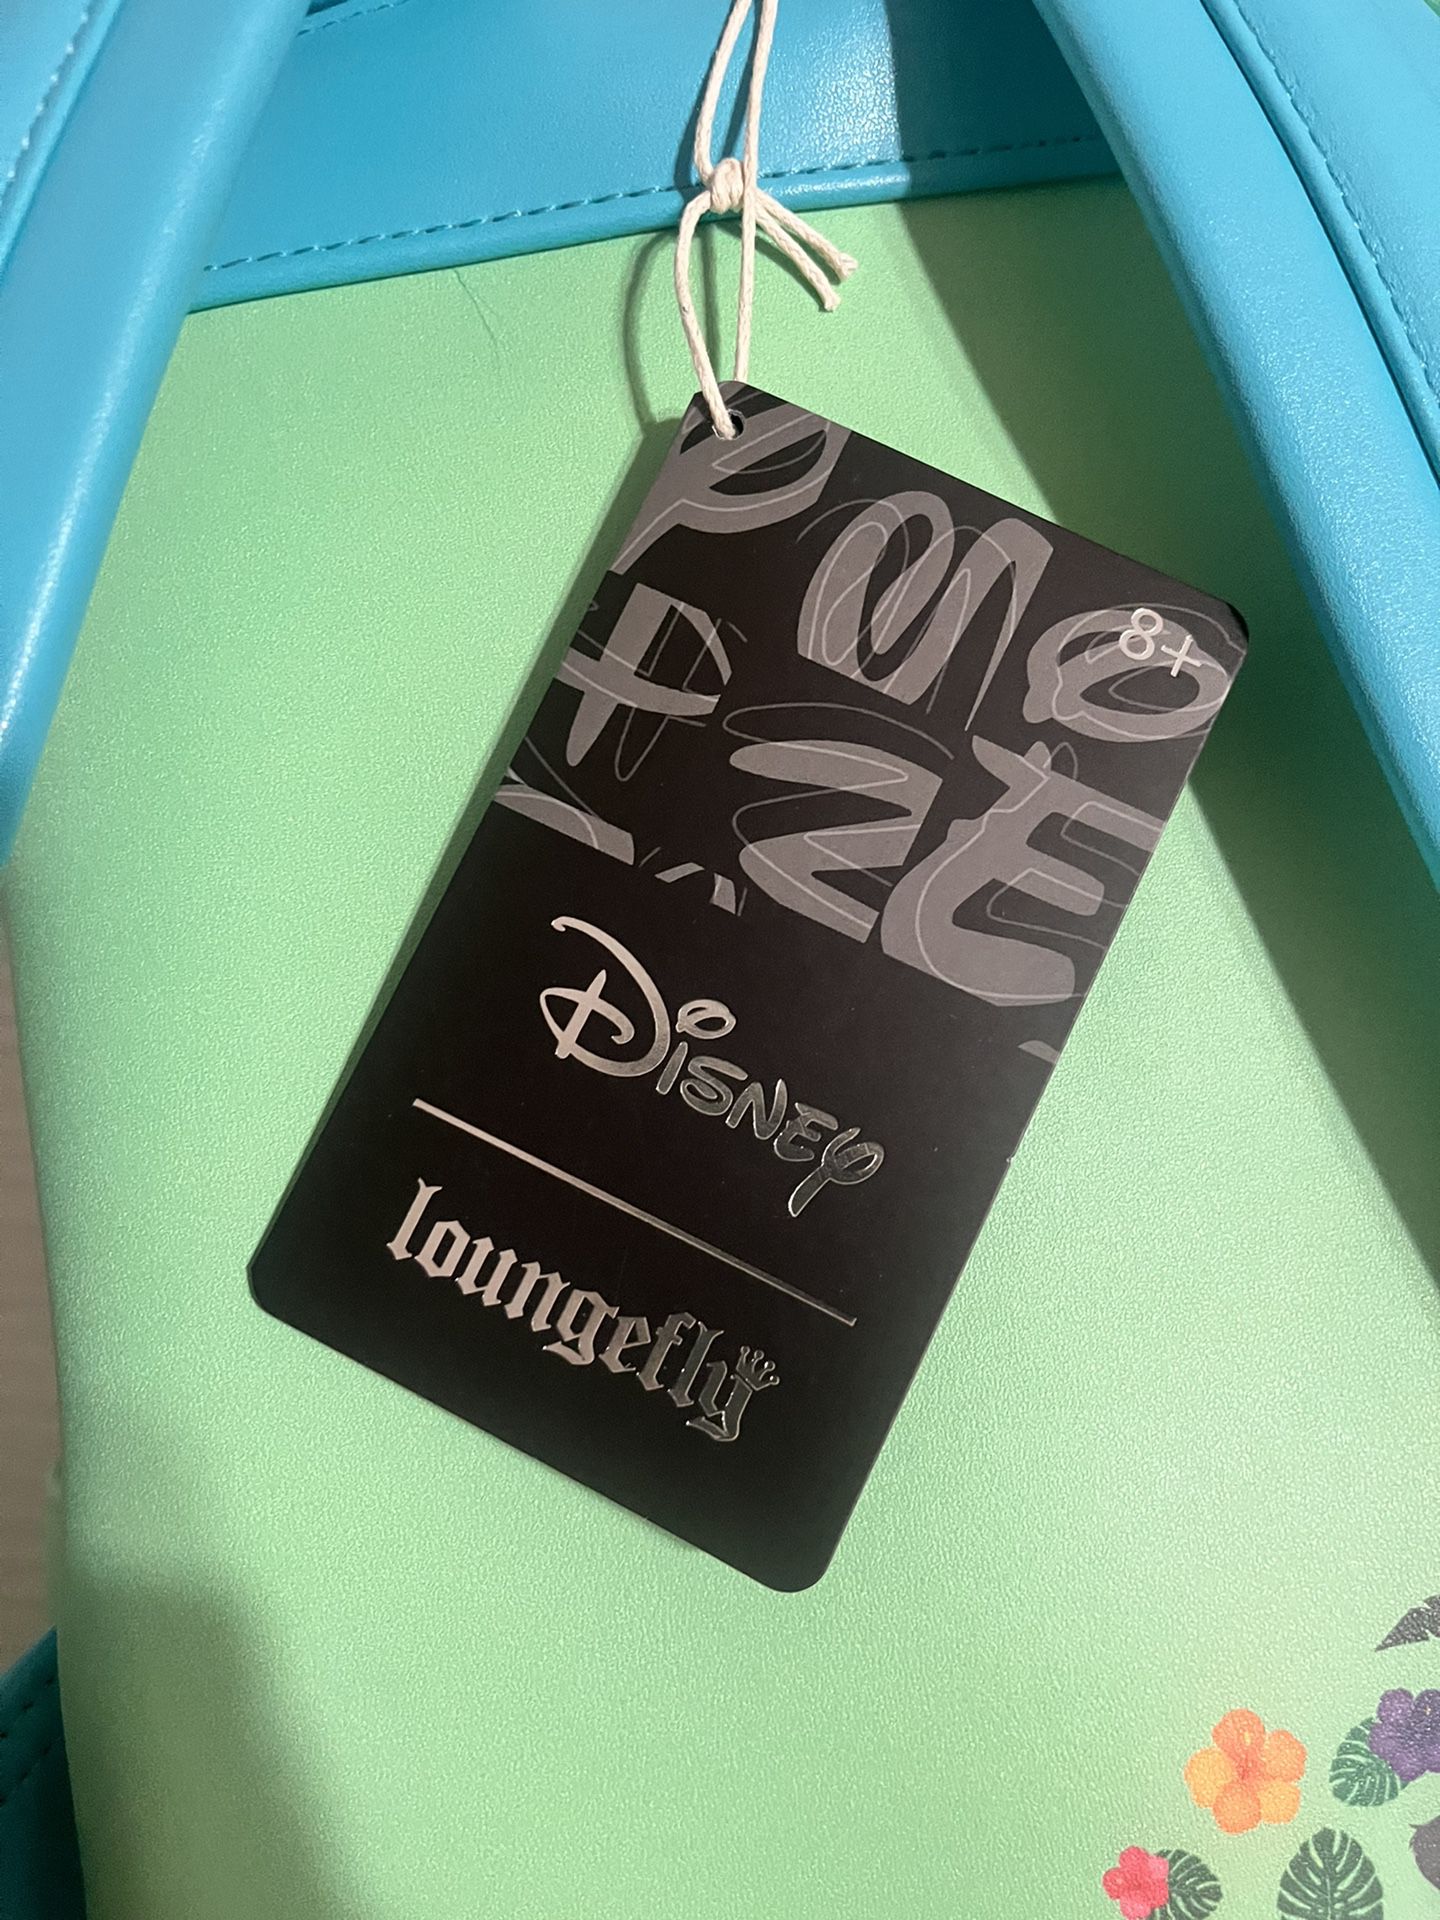 Disney Jungle Book Lounge Fly Backpack 